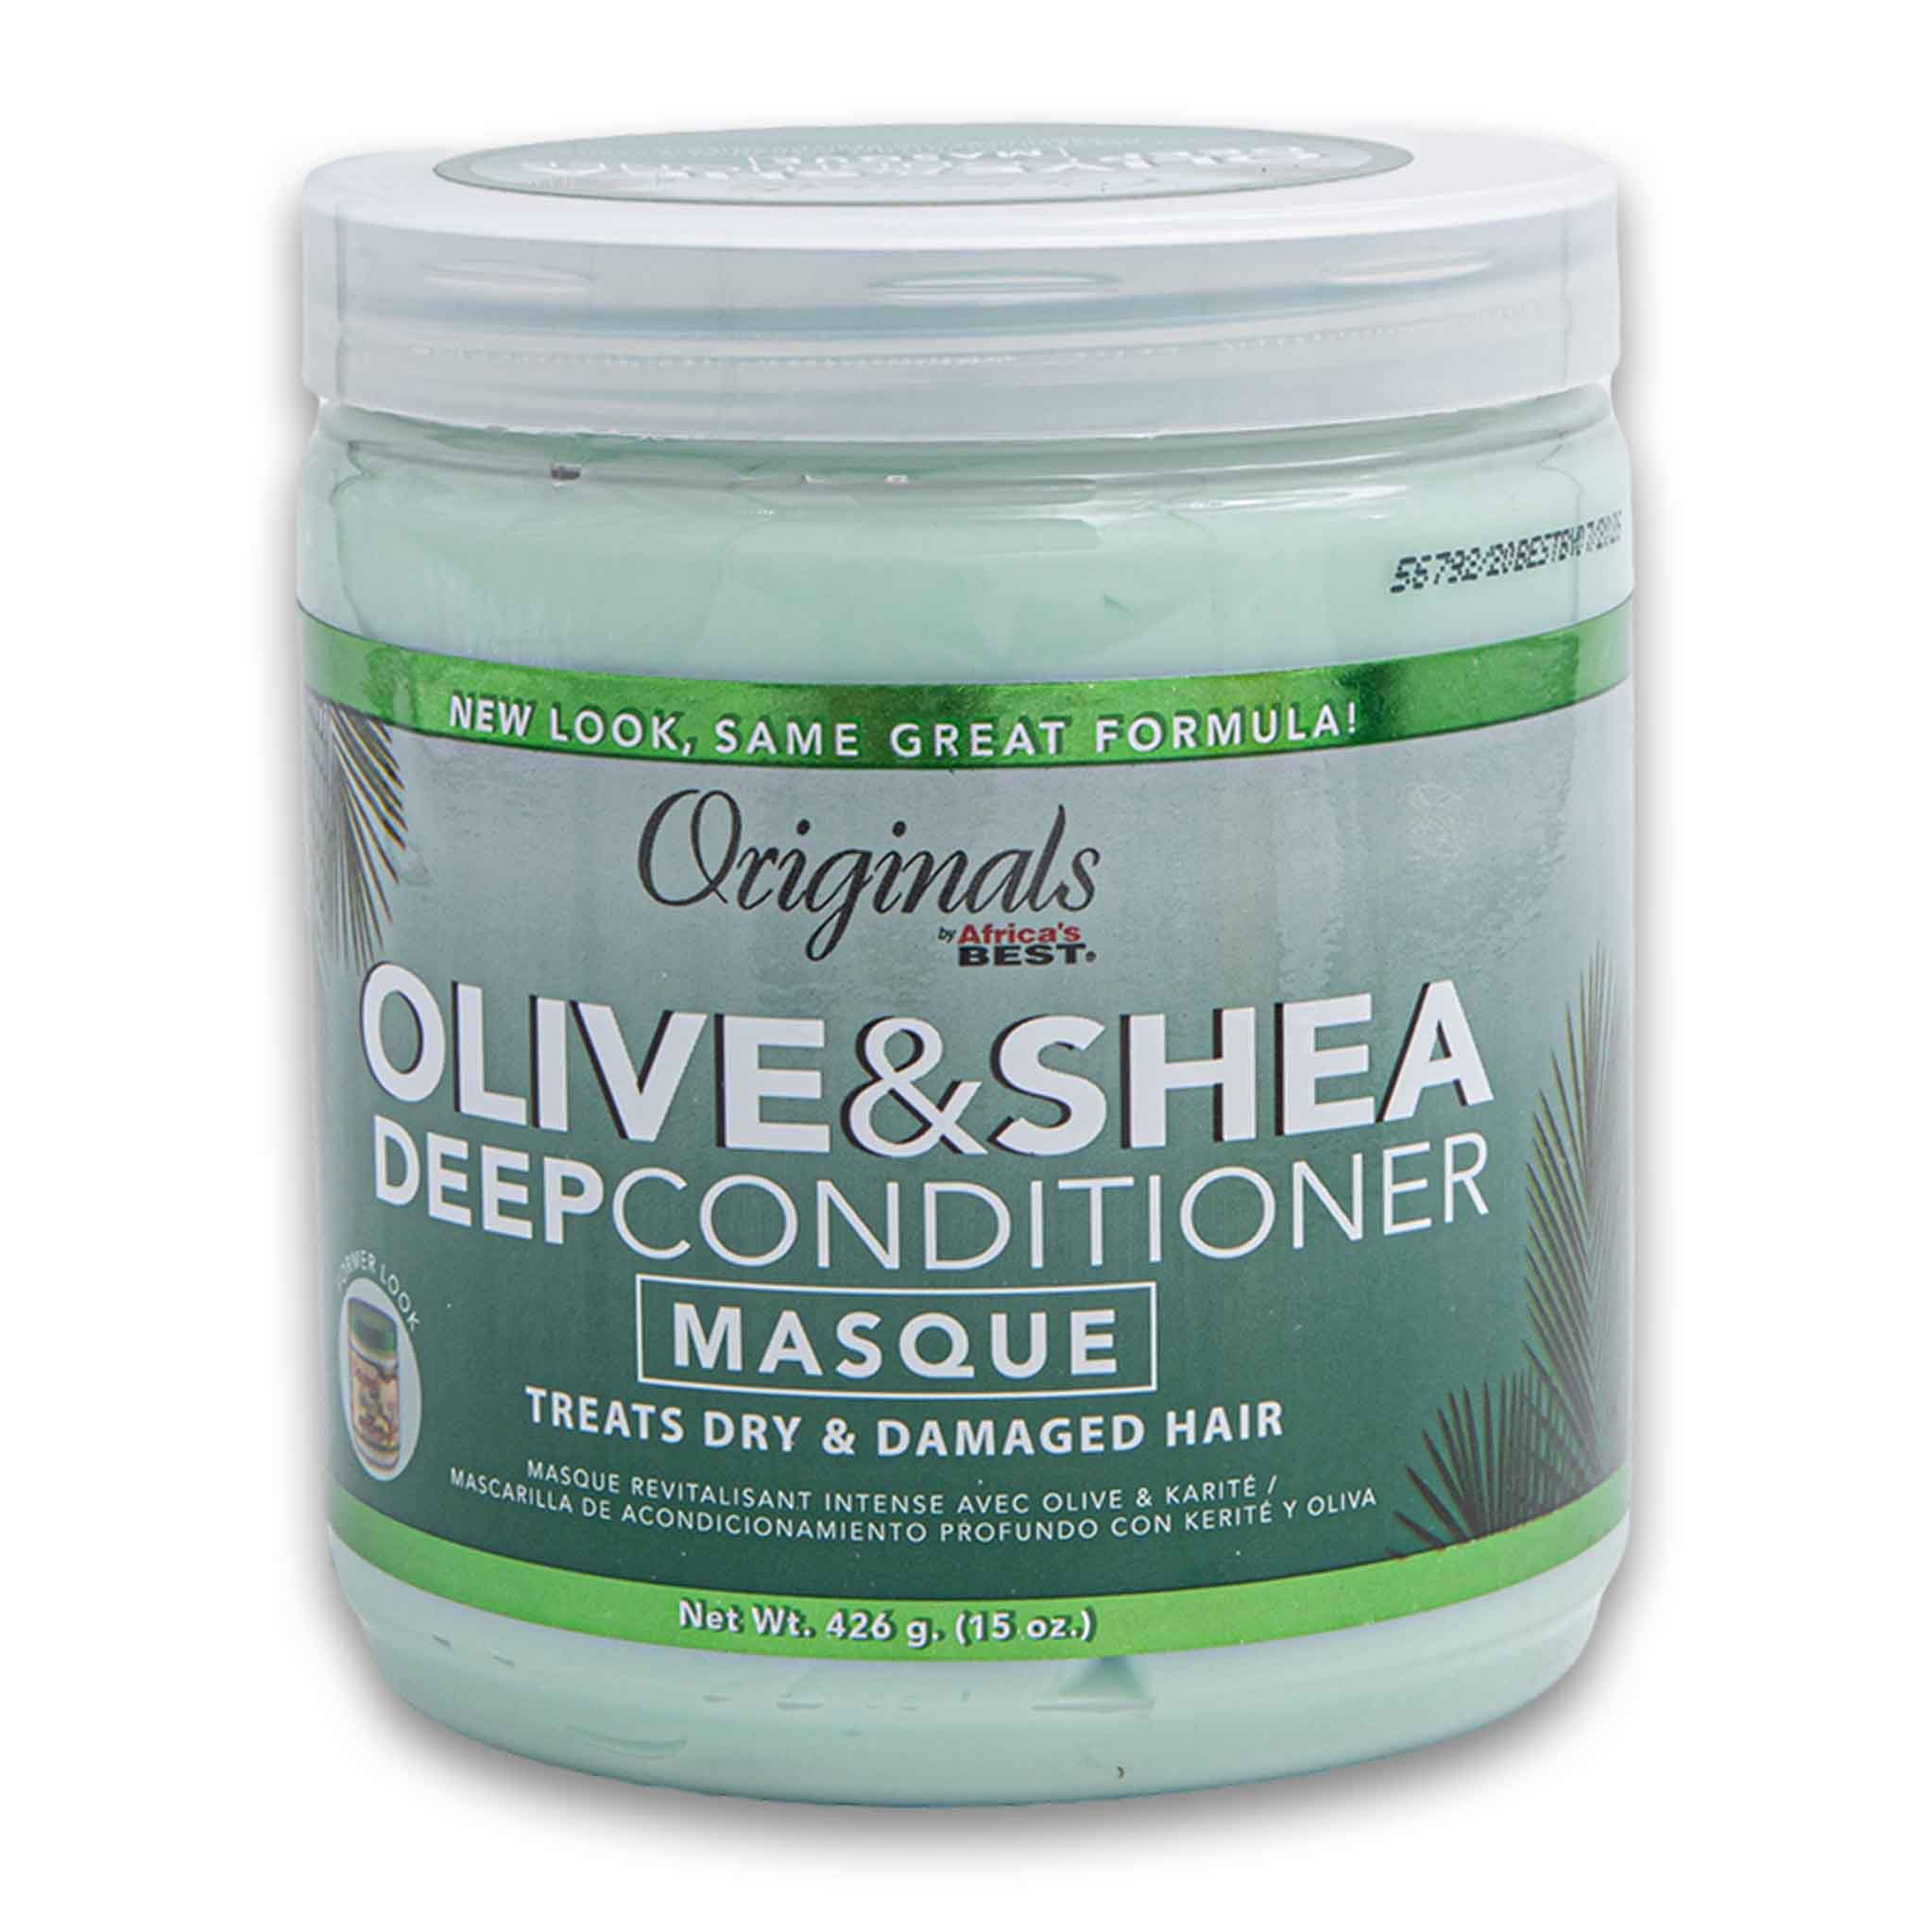 Originals olive & shea deep conditioner masque 434ml